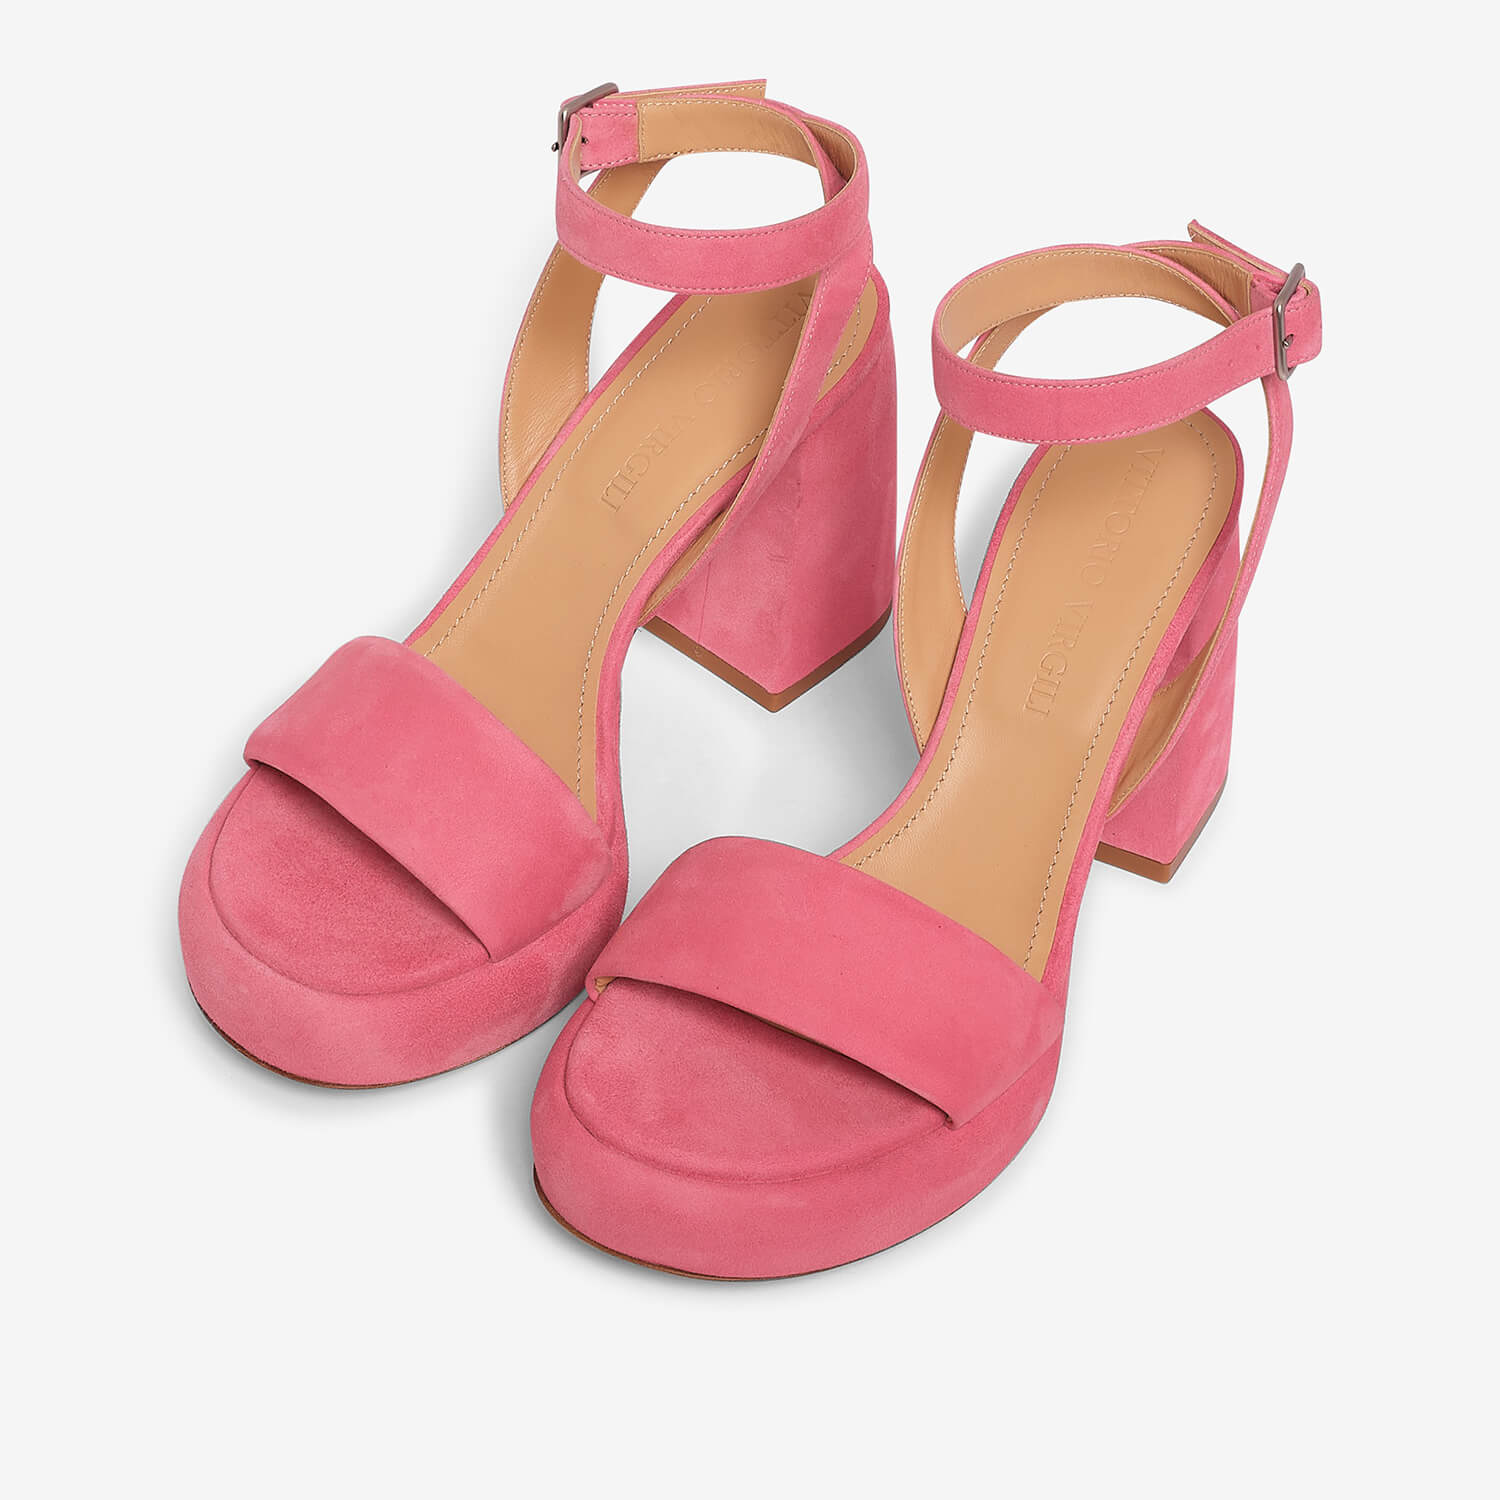 Sandalo platform pelle di capra rosa donna